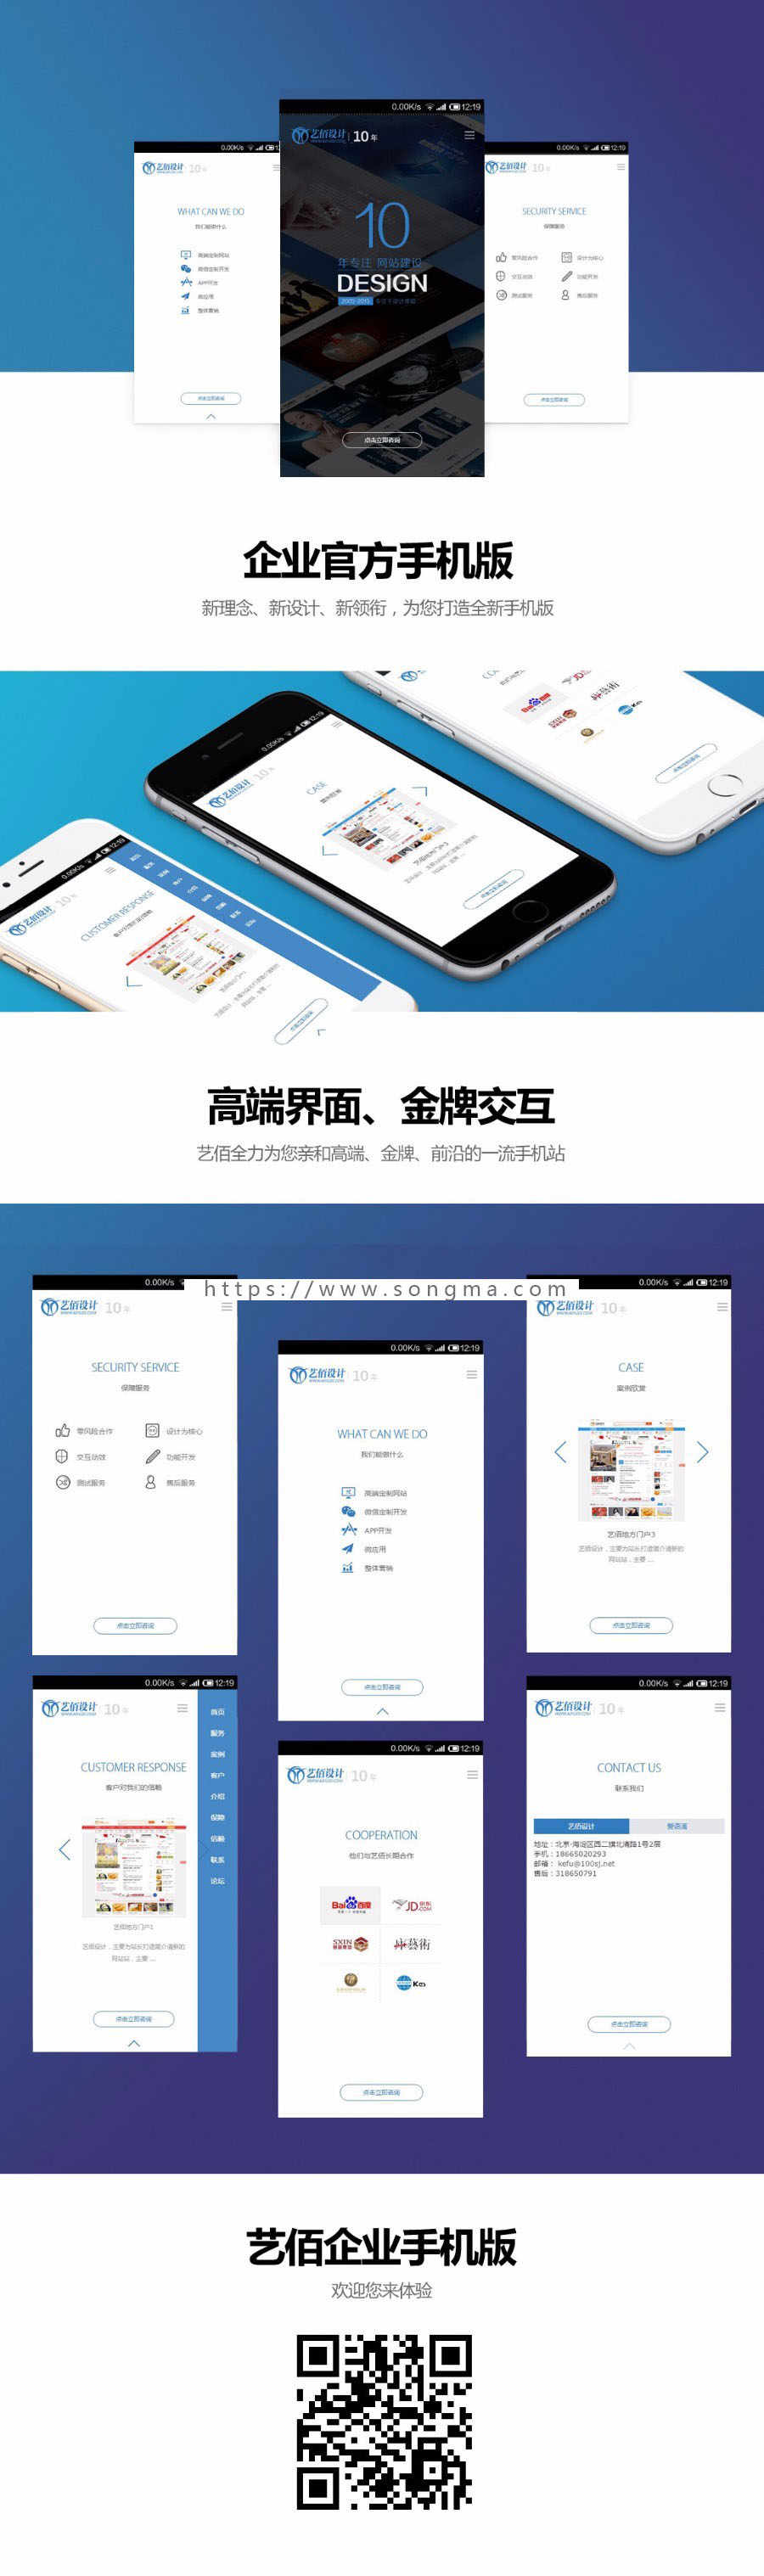 discuz 模板 艺佰交互式企业手机 gbk1.1 dz手机企业公司响应模板